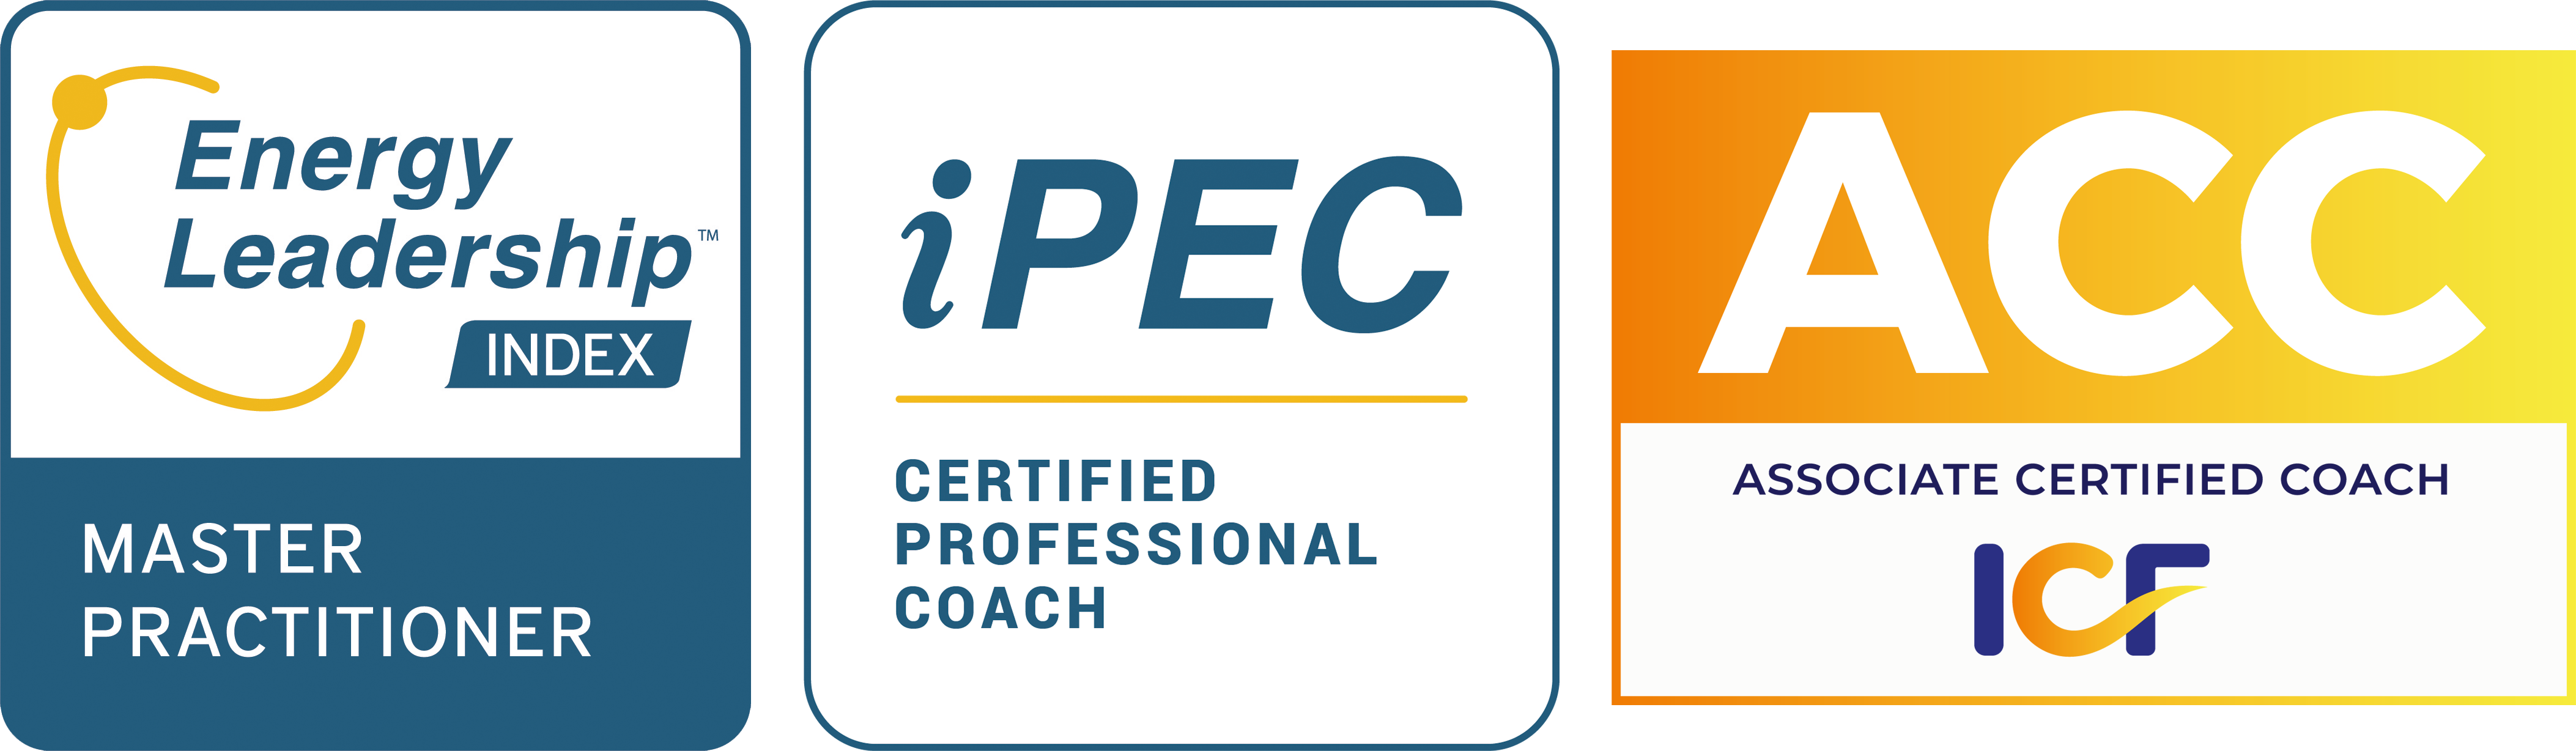 Certificates-Energy Leadership-iPEC-ACC